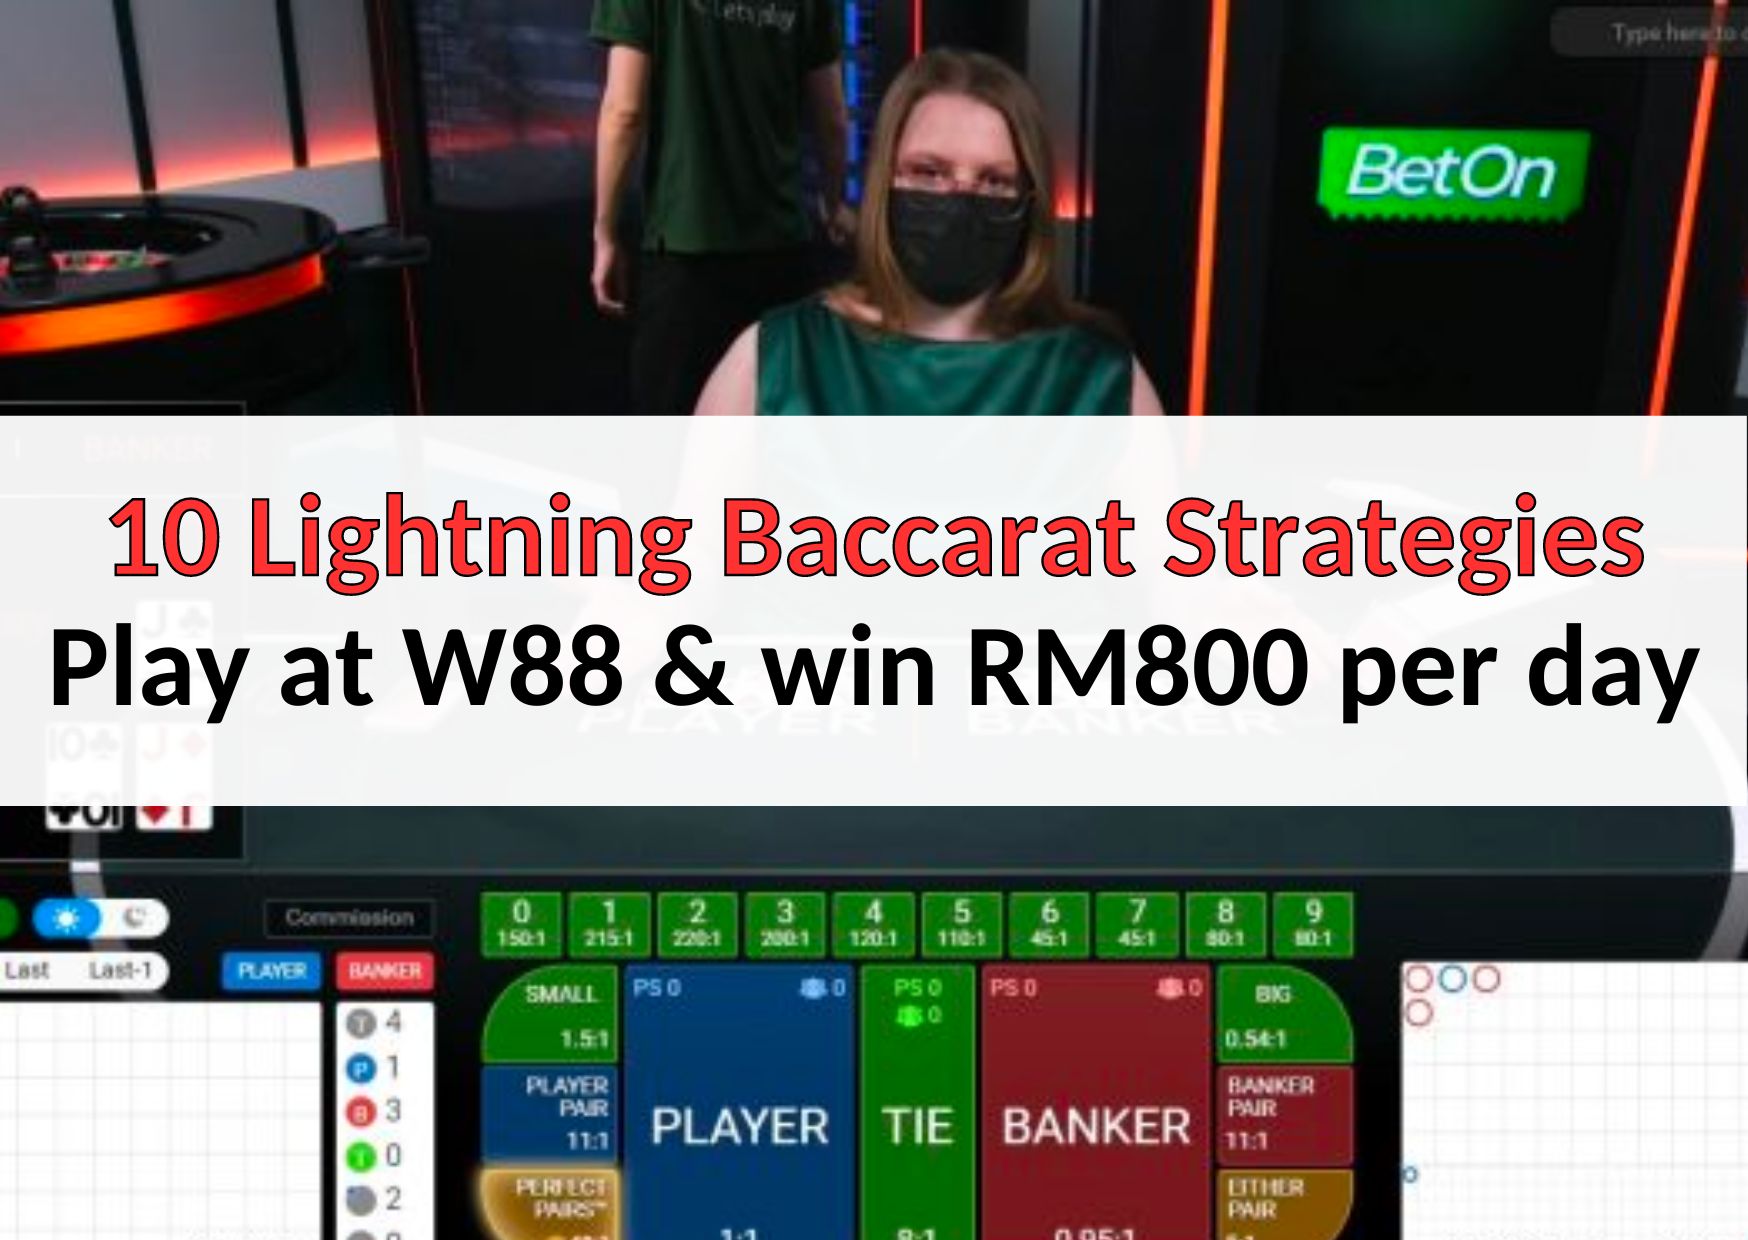 10 Lightning Baccarat Strategies